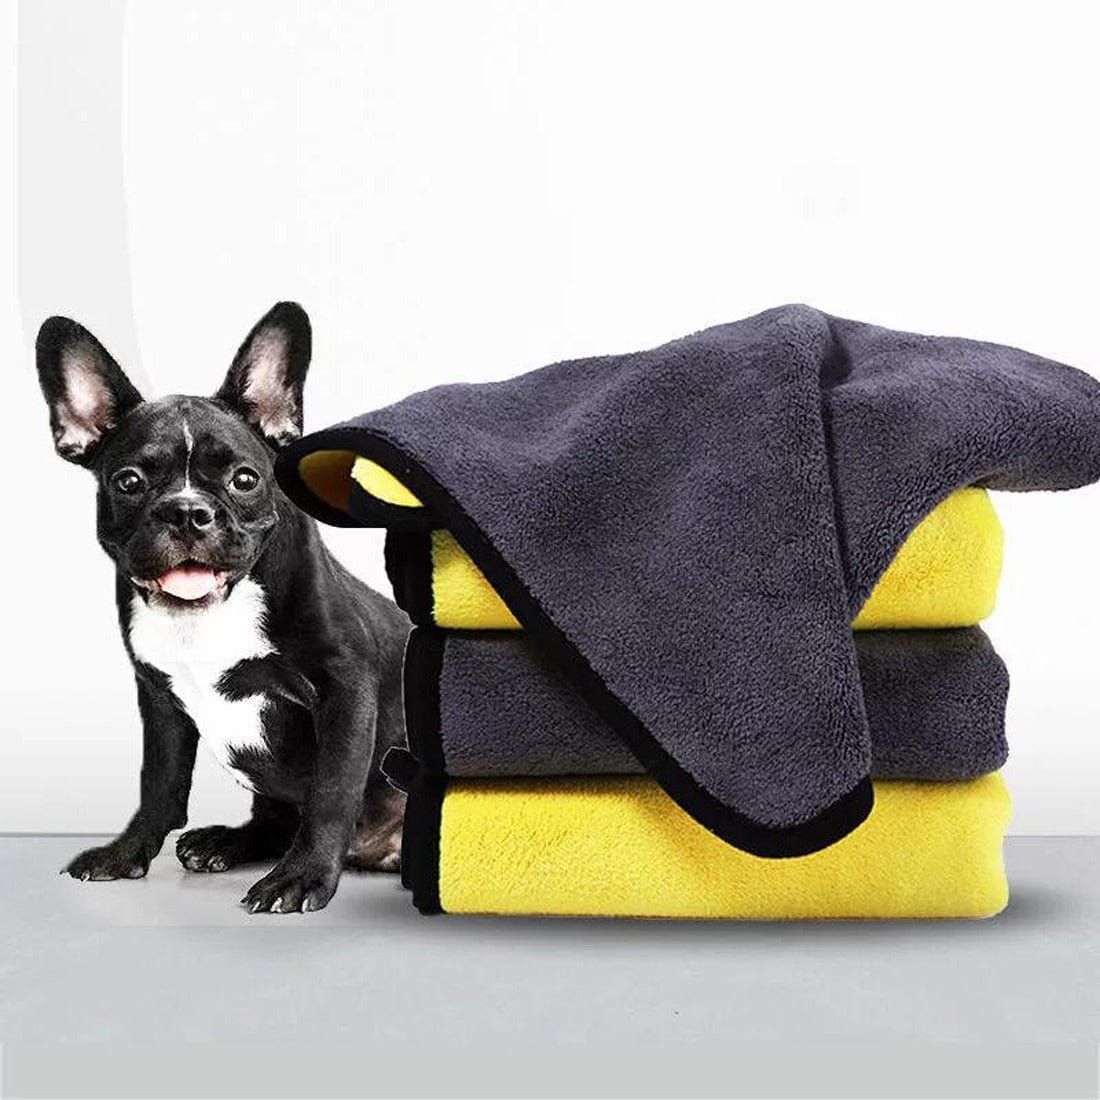 KUTKUT Dog Bath Towel - Super Absorbent Microfiber Dog Towel for Small Medium Large Dogs and Cats, Yellow - Grey-Clothing-kutkutstyle